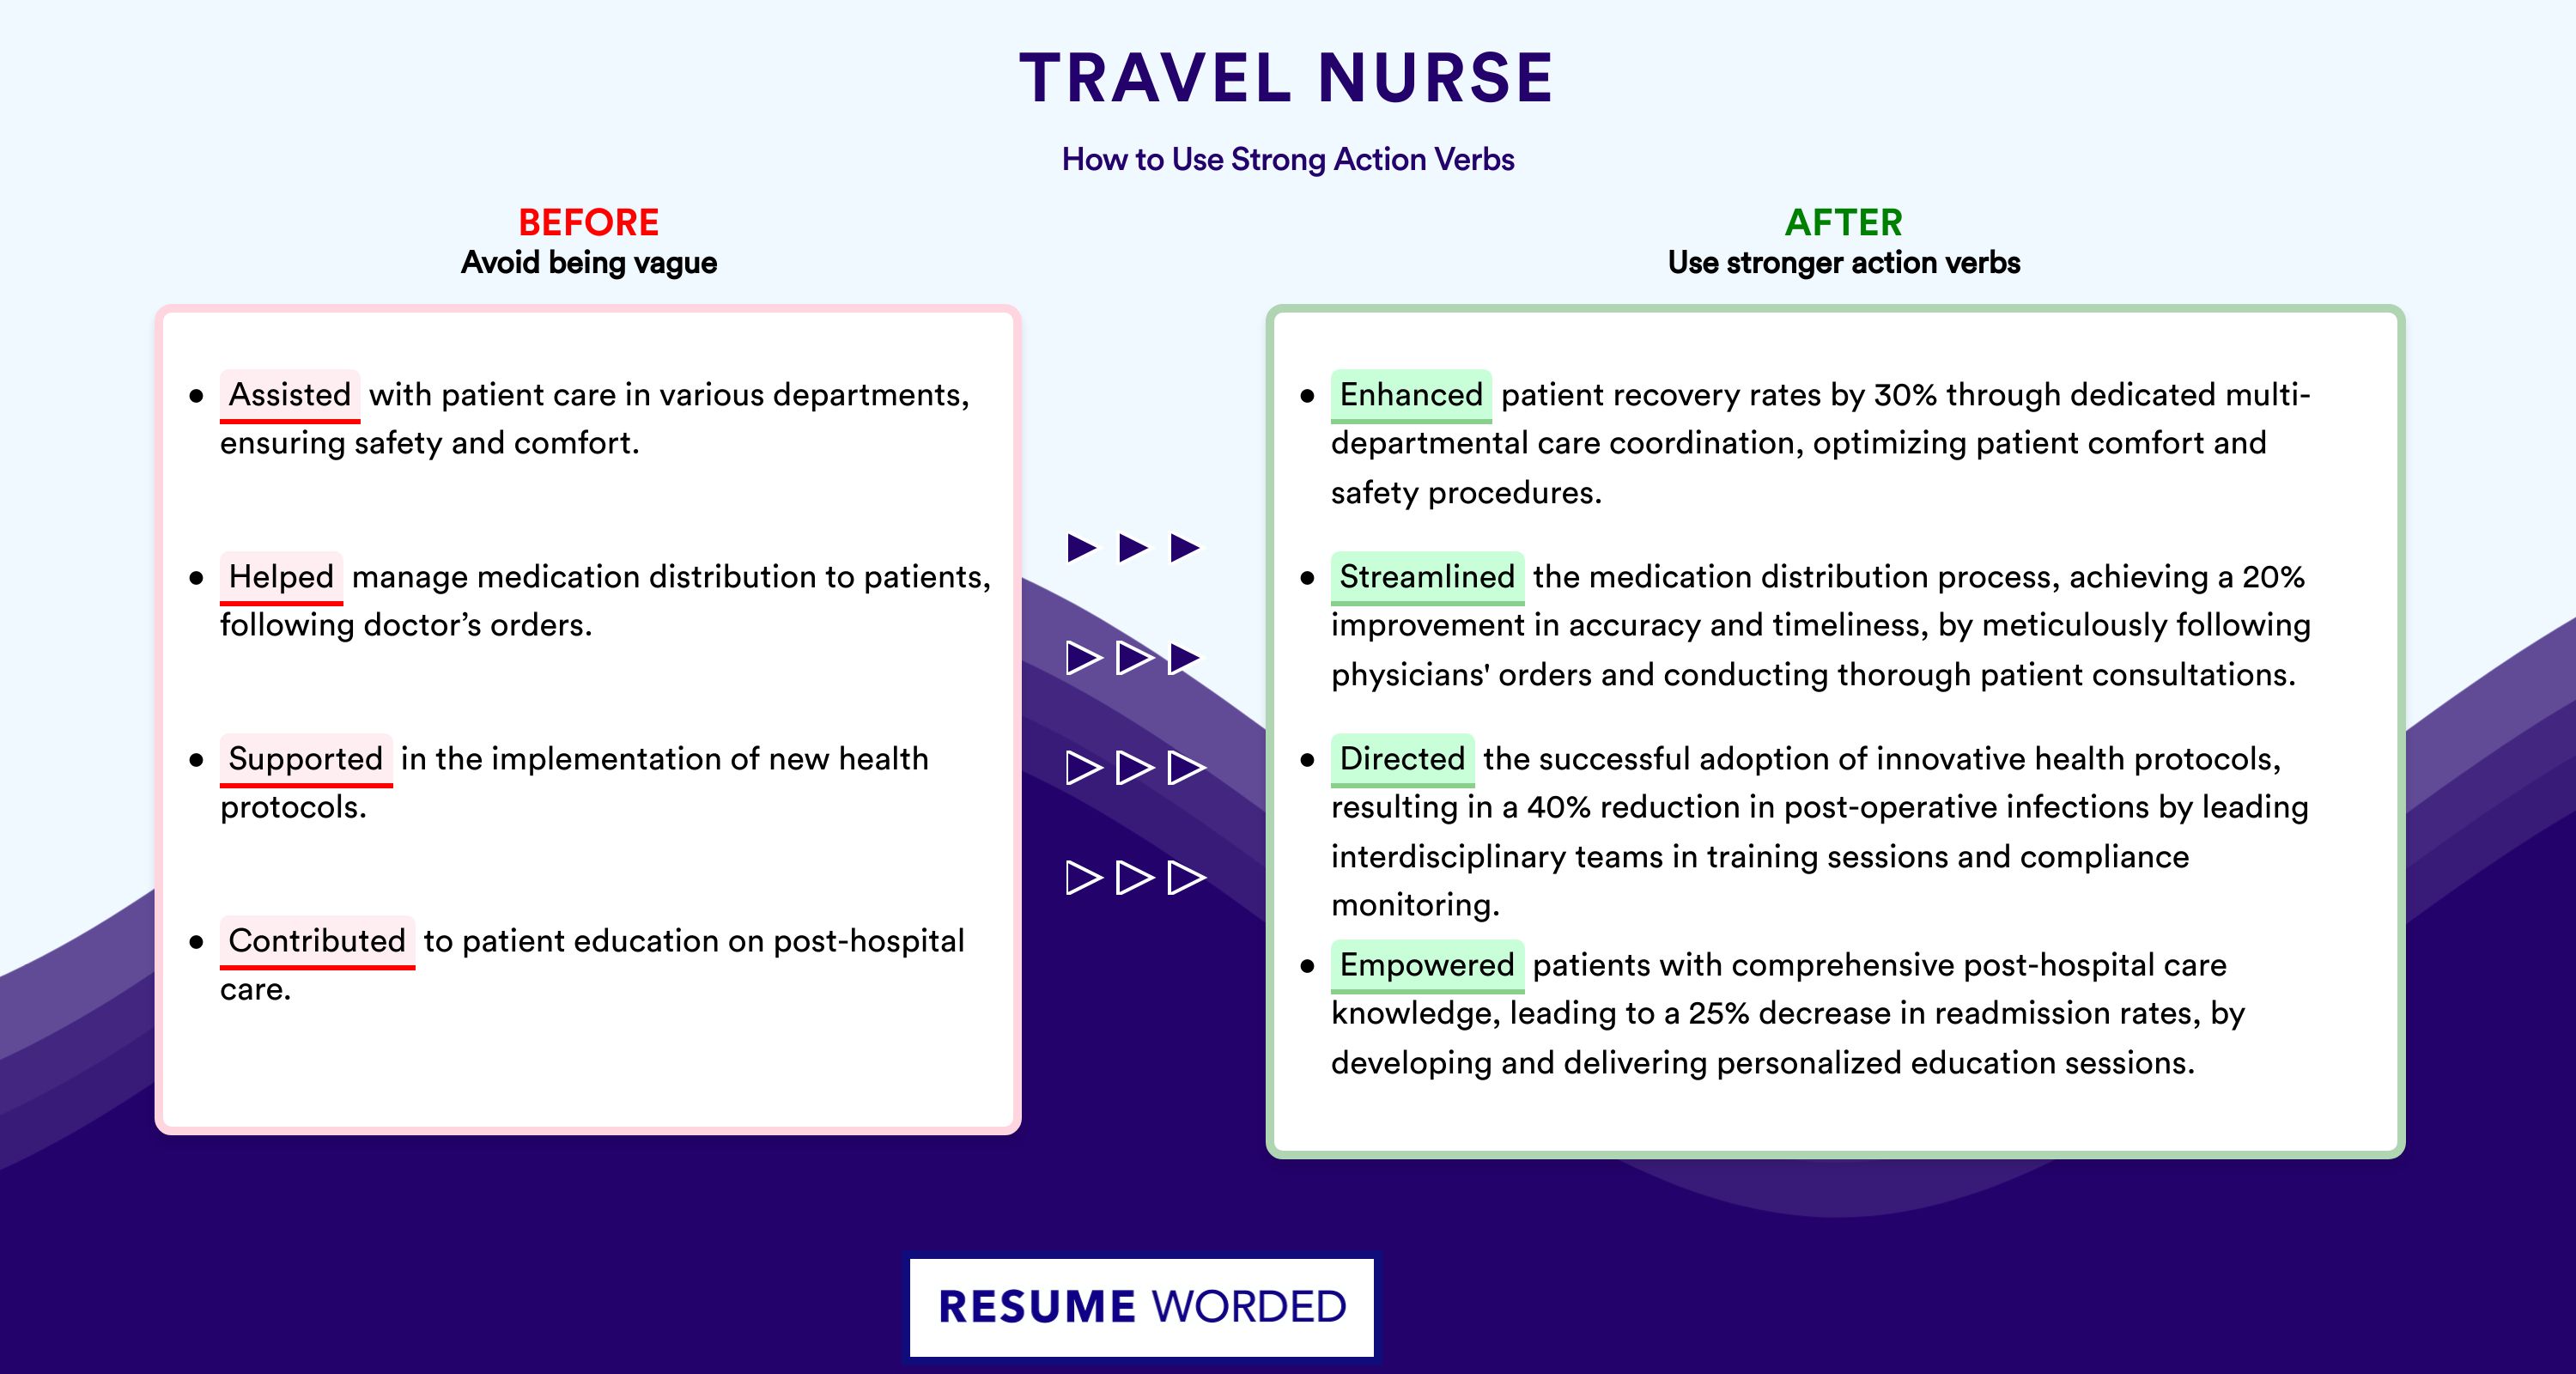 Action Verbs for Travel Nurse